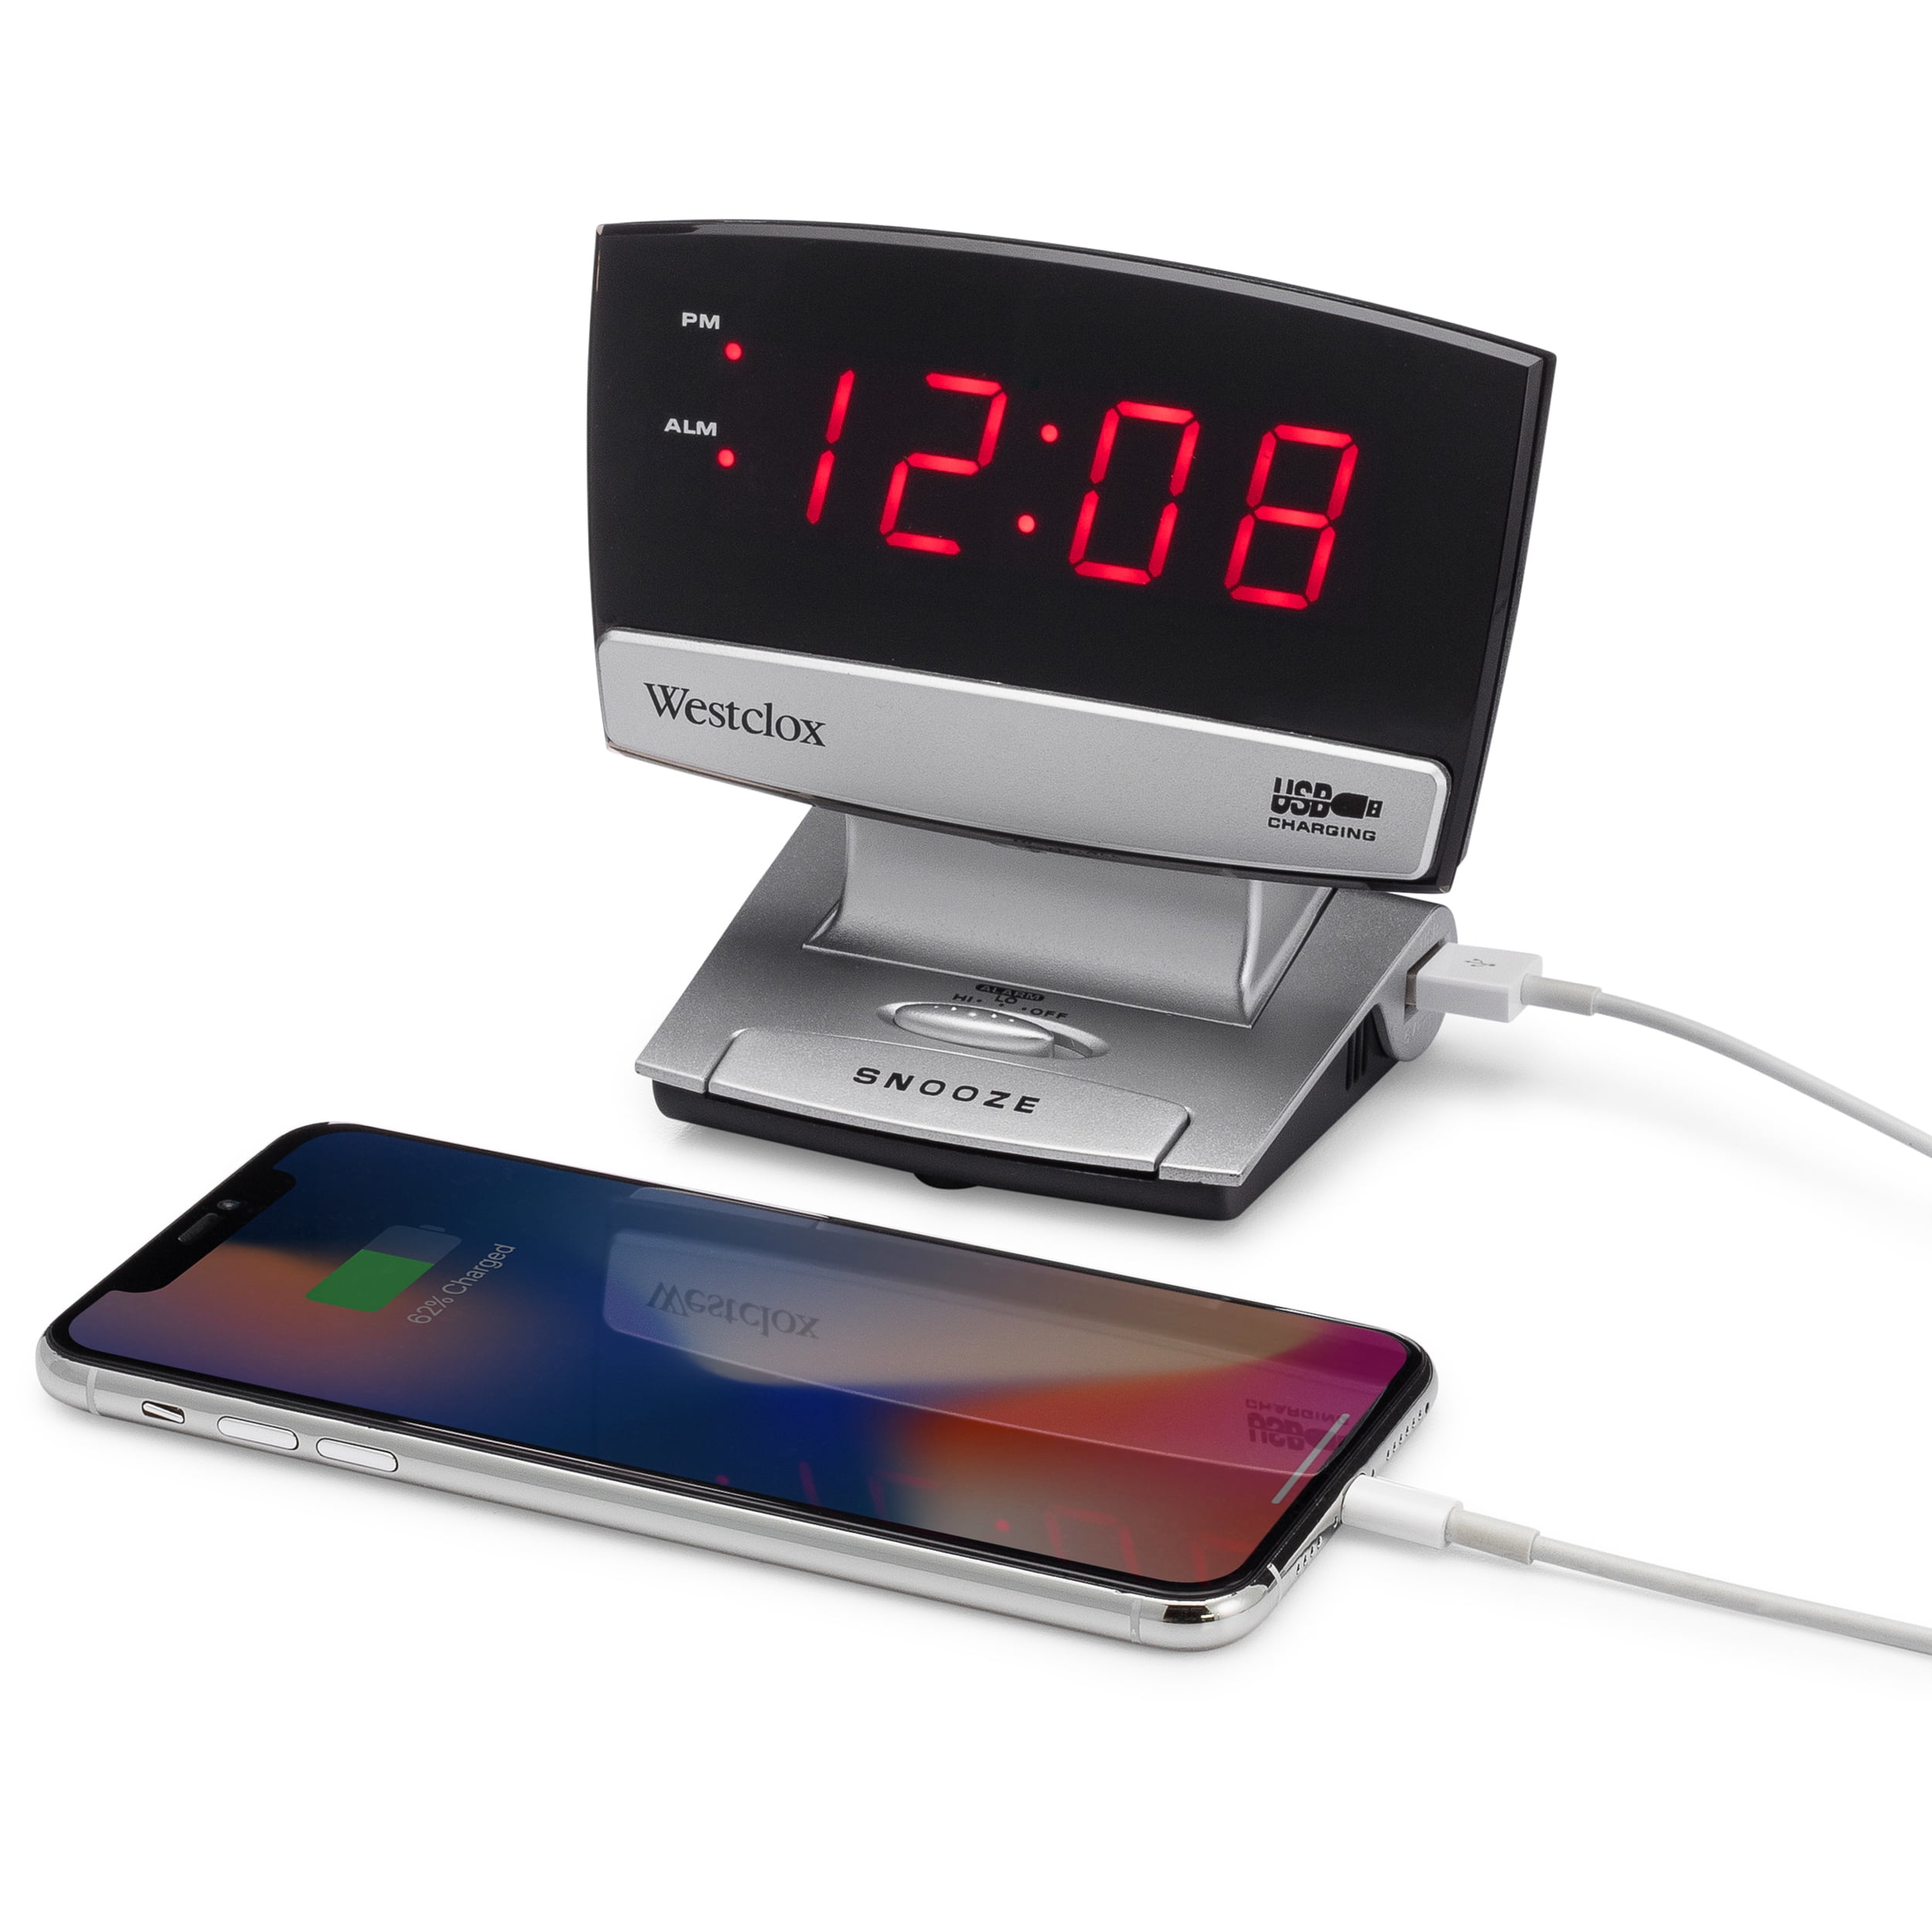 Sharp Digital Alarm Clock with 2 FastCharge USB ports, SPC189 